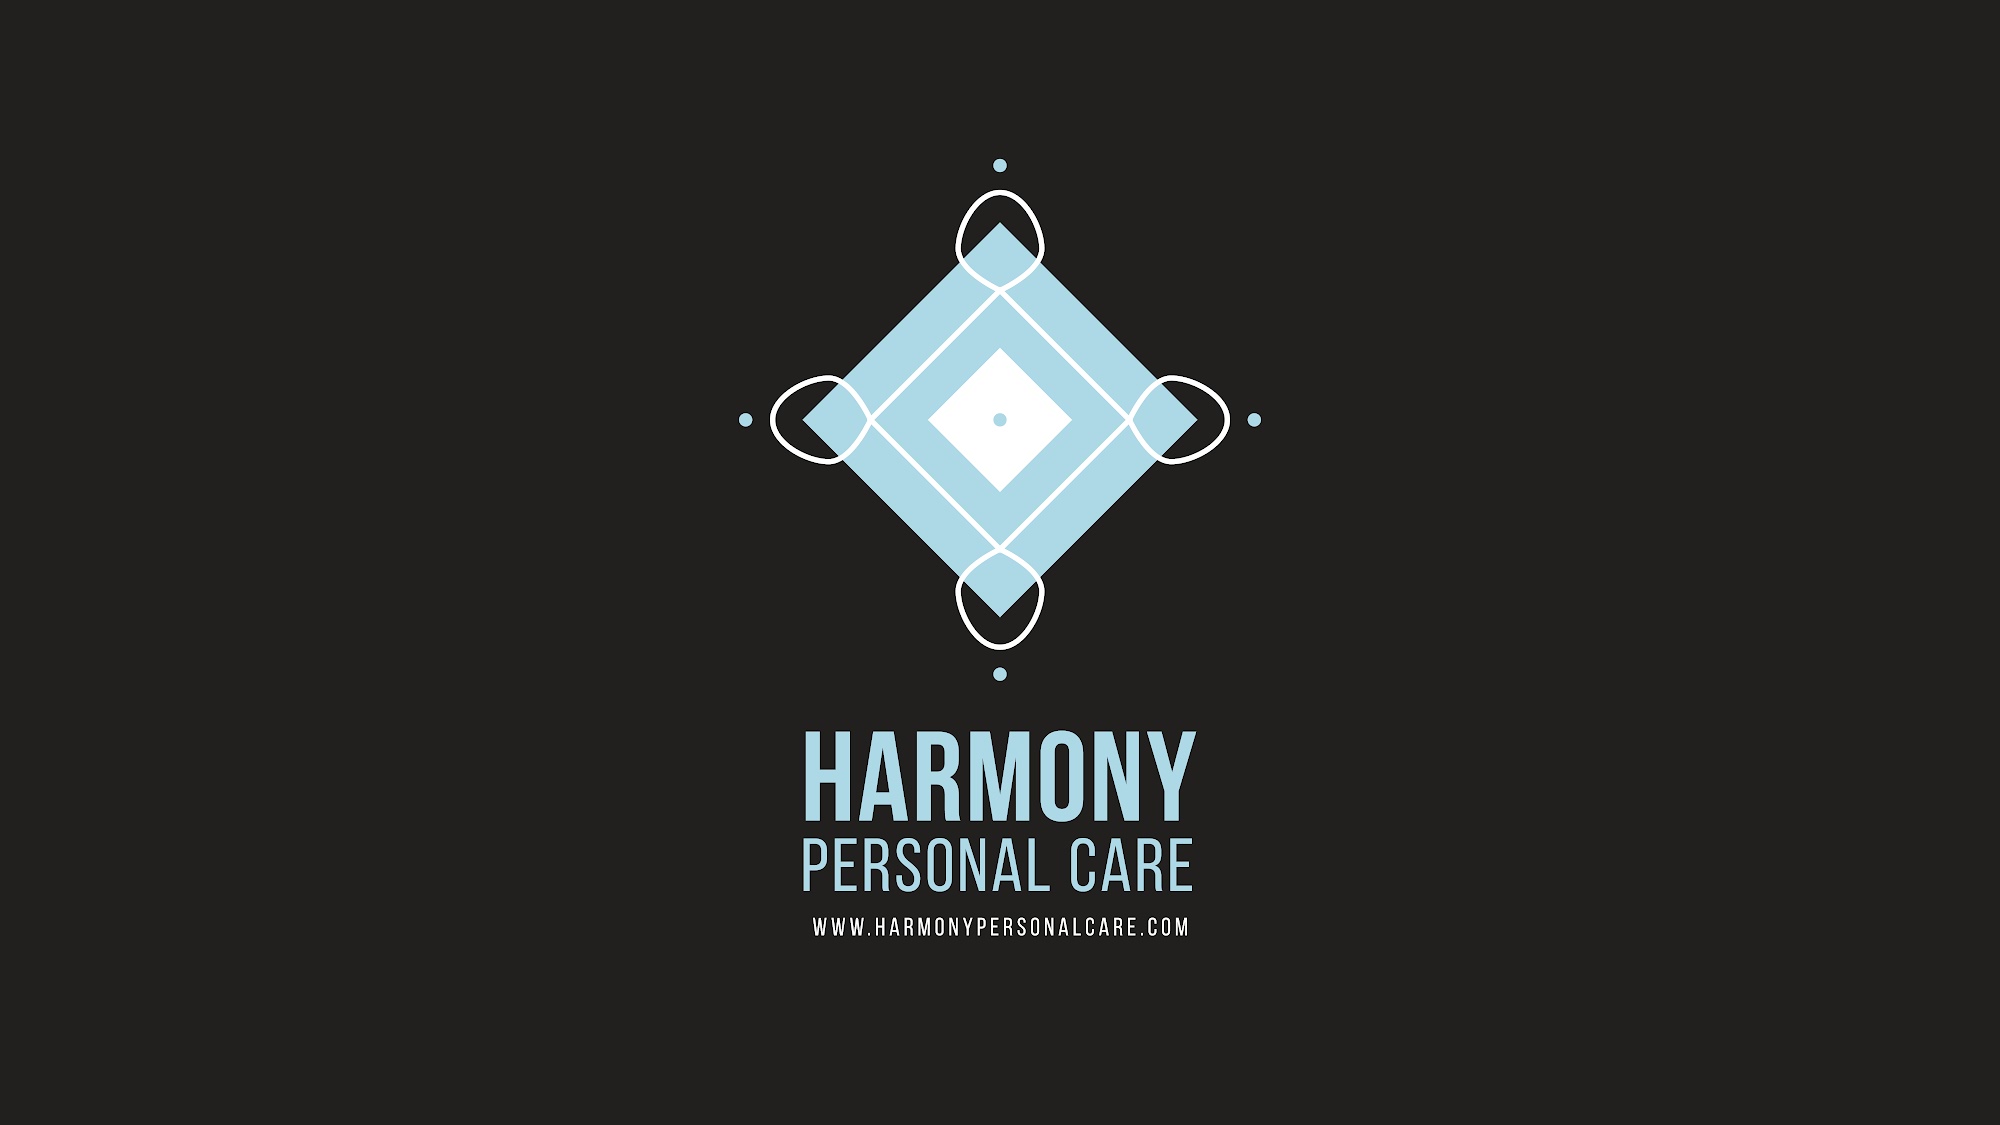 Harmony Personal Care